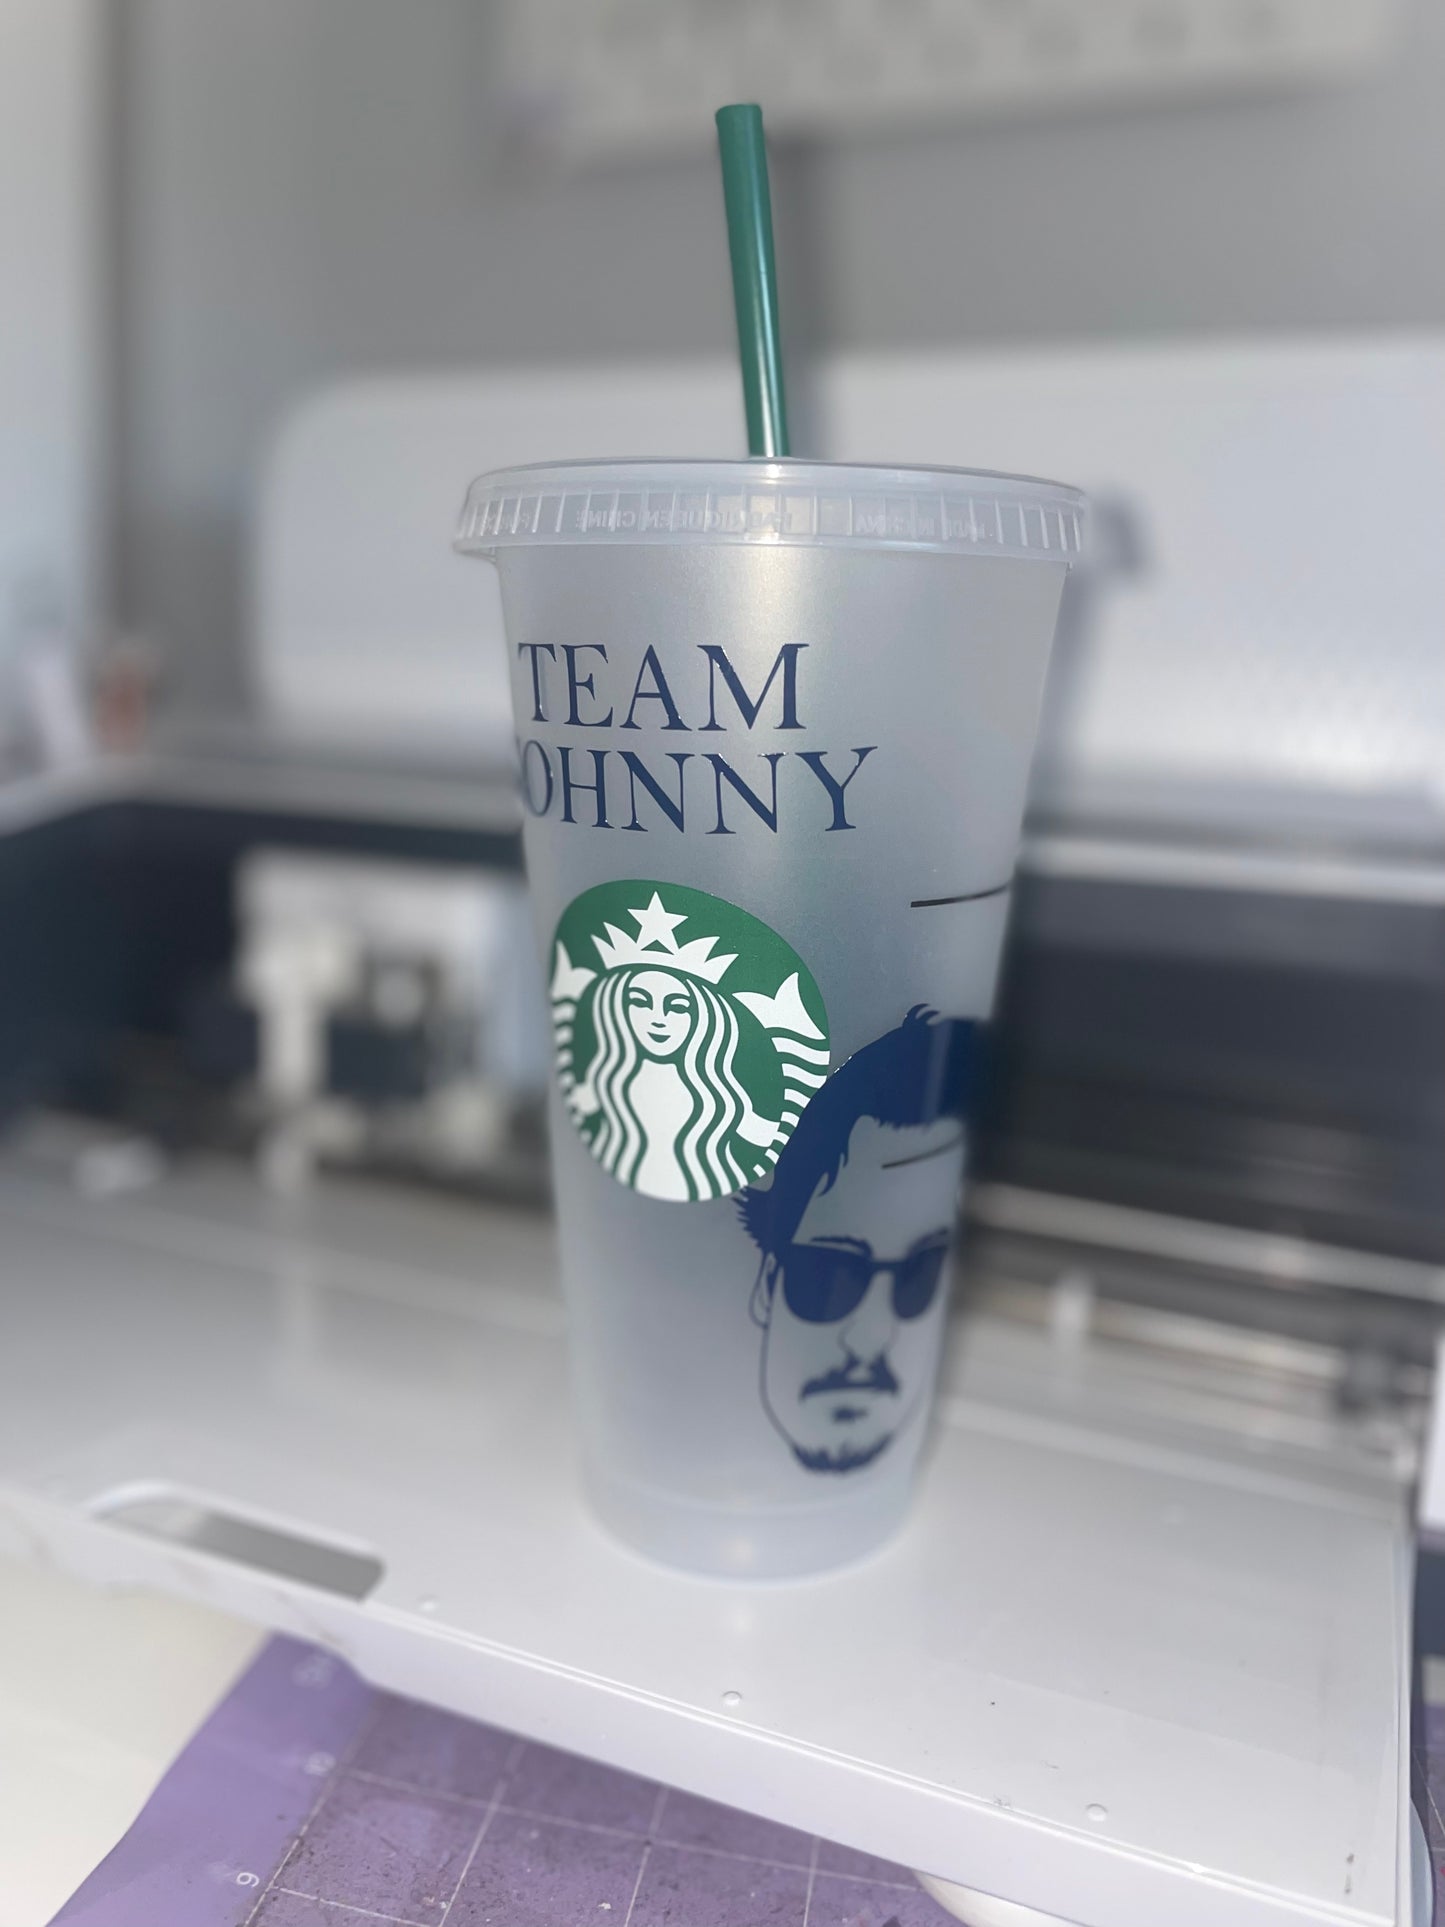 Starbucks inspired cups